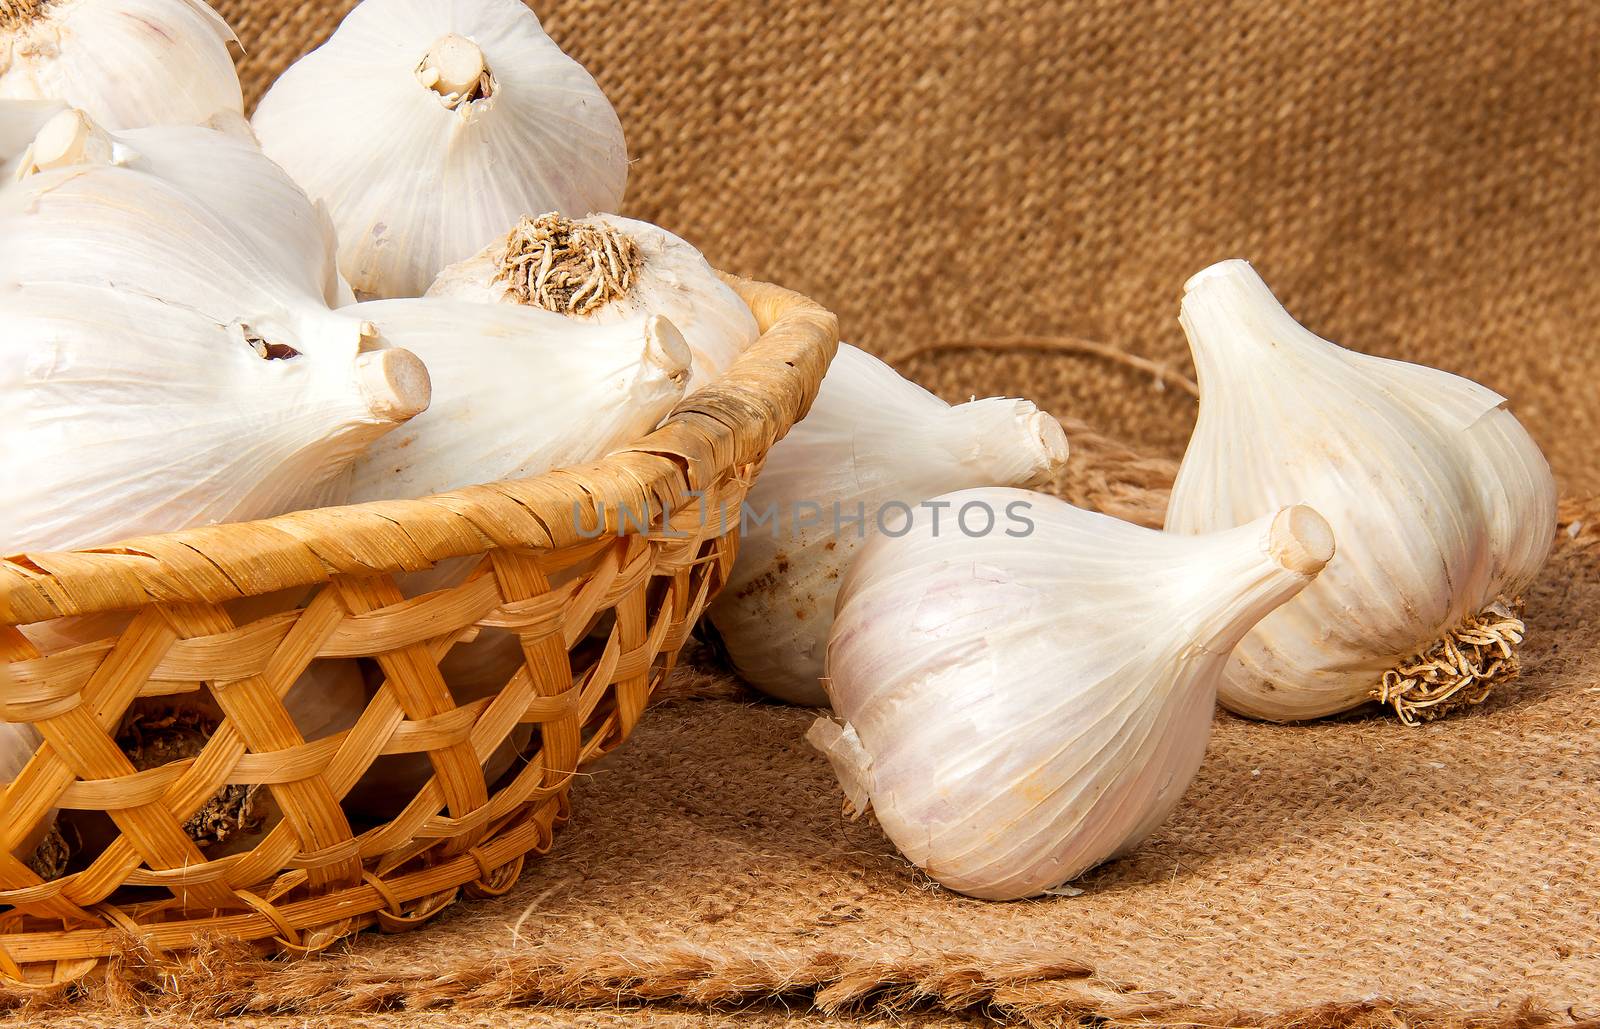 Whole head of garlic in a wicker basket on sackcloth